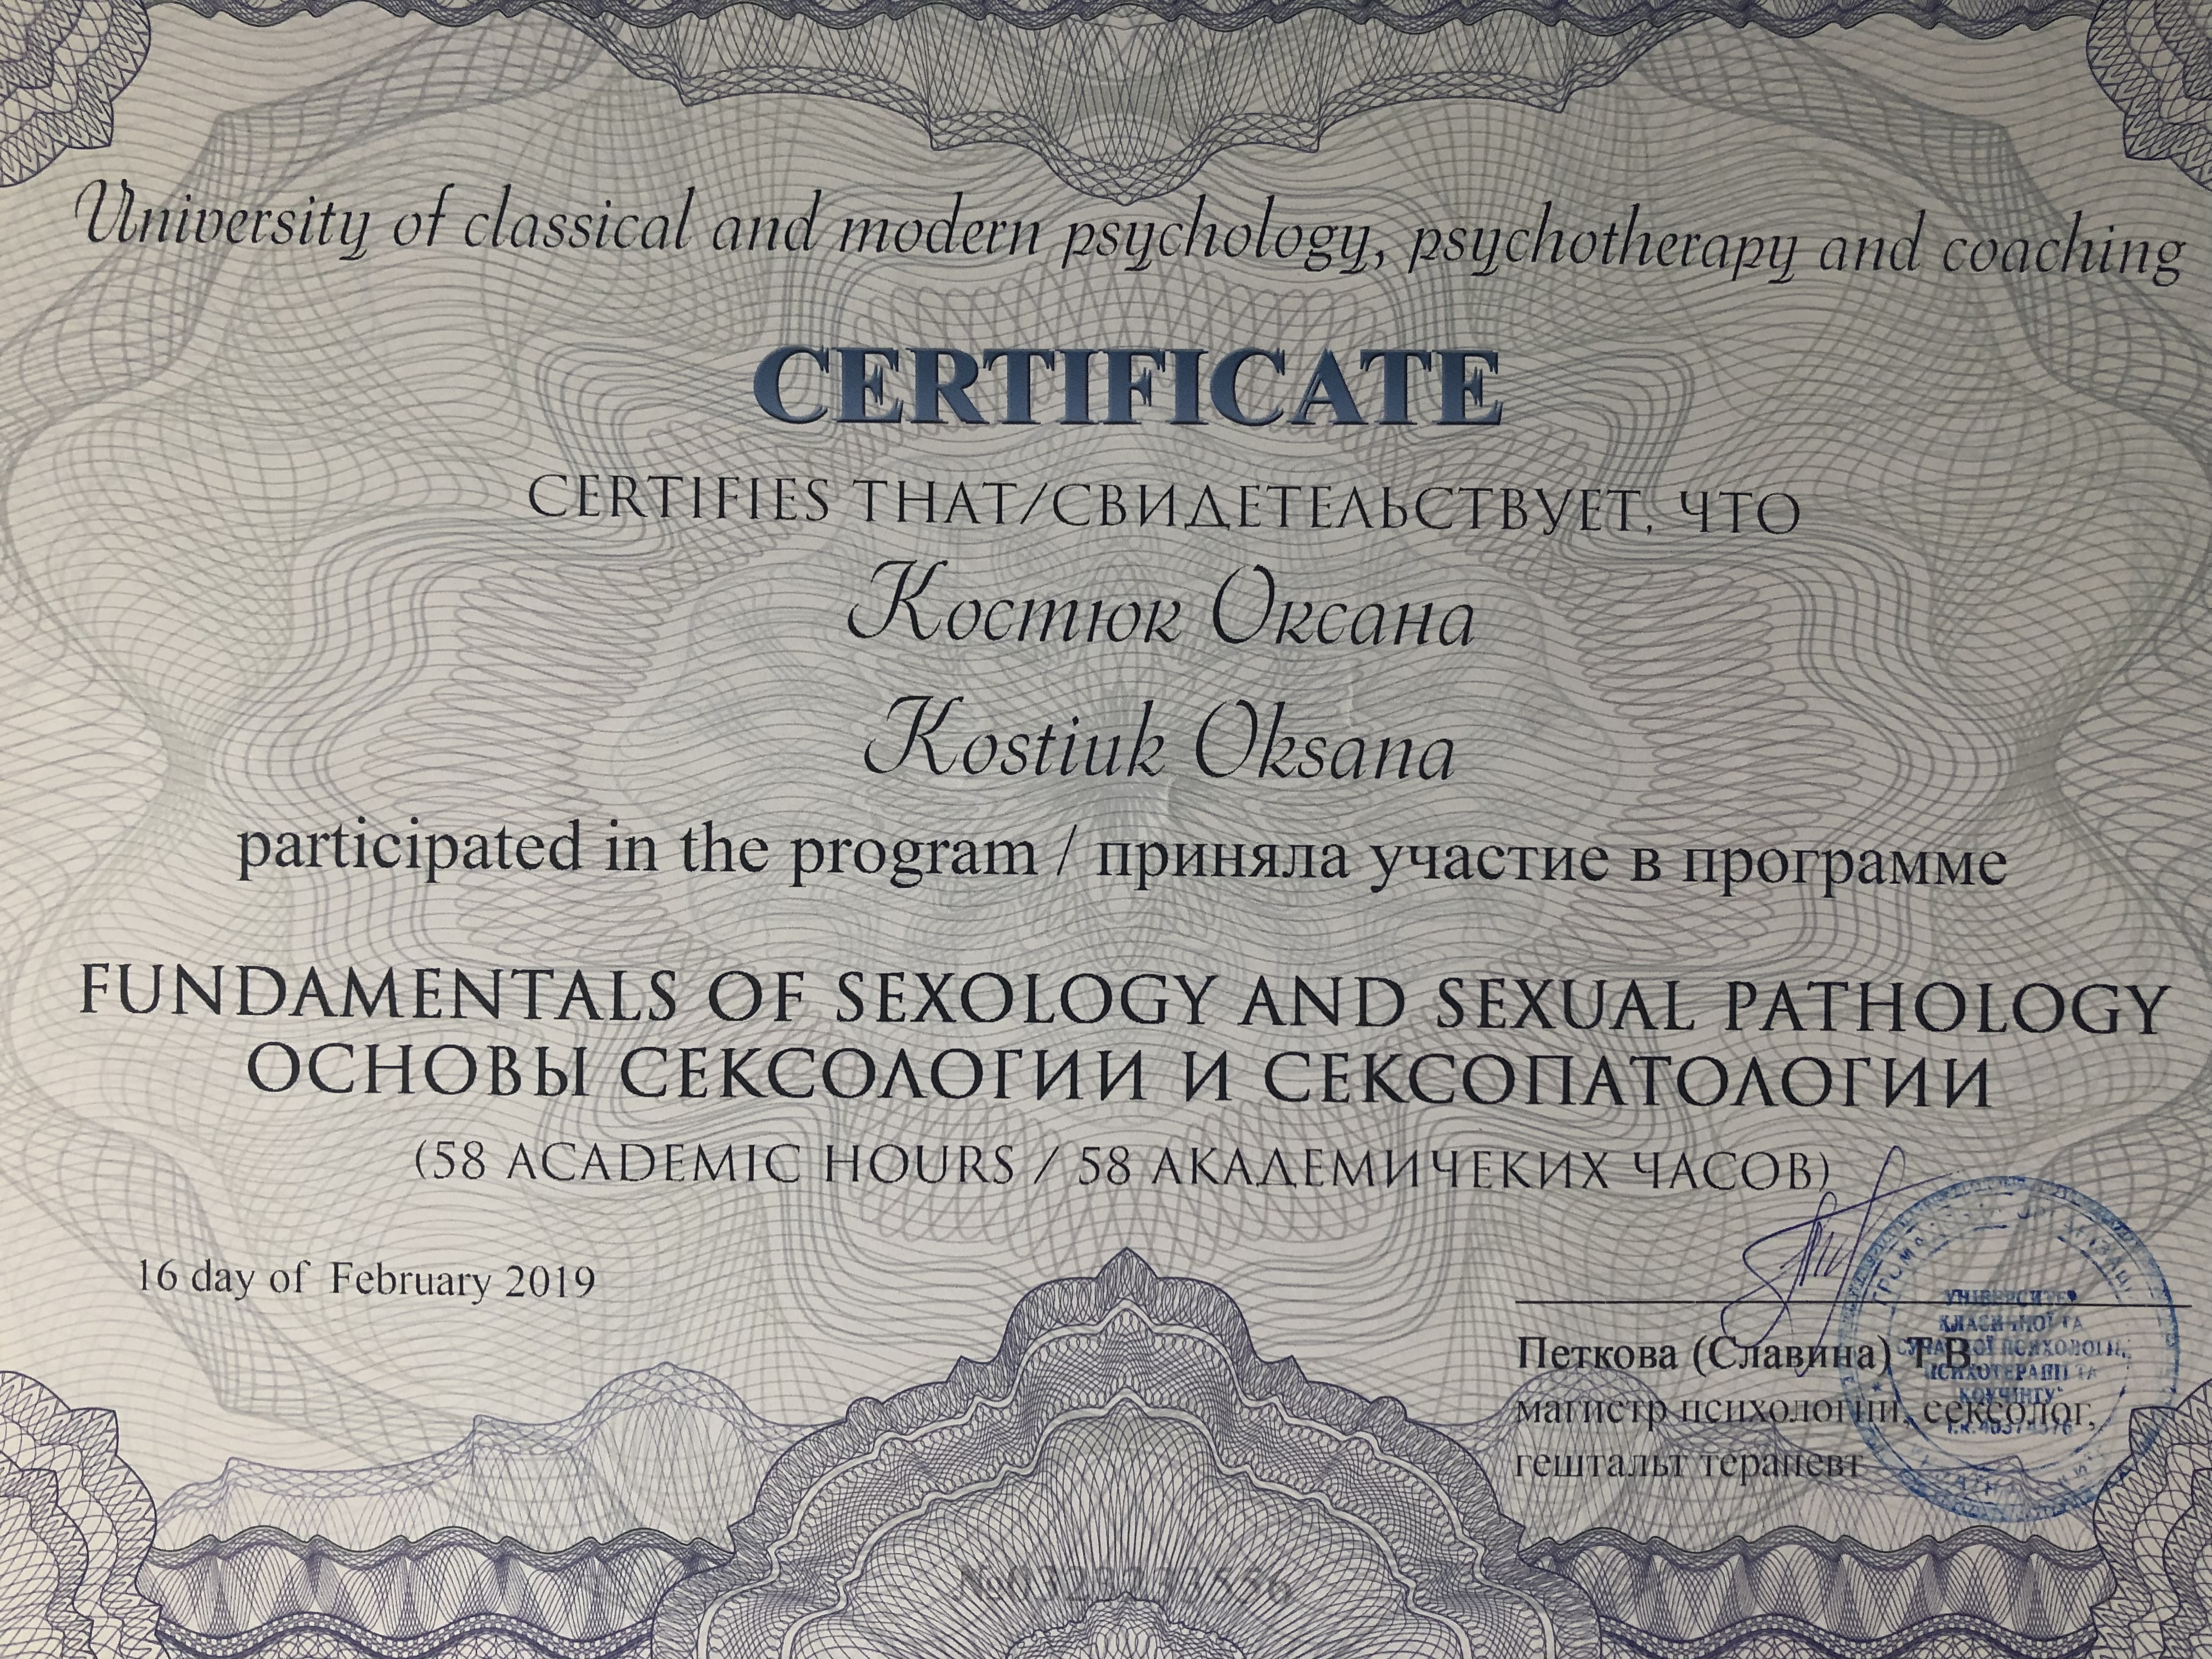 Fundamentals of sexology and sexopathology